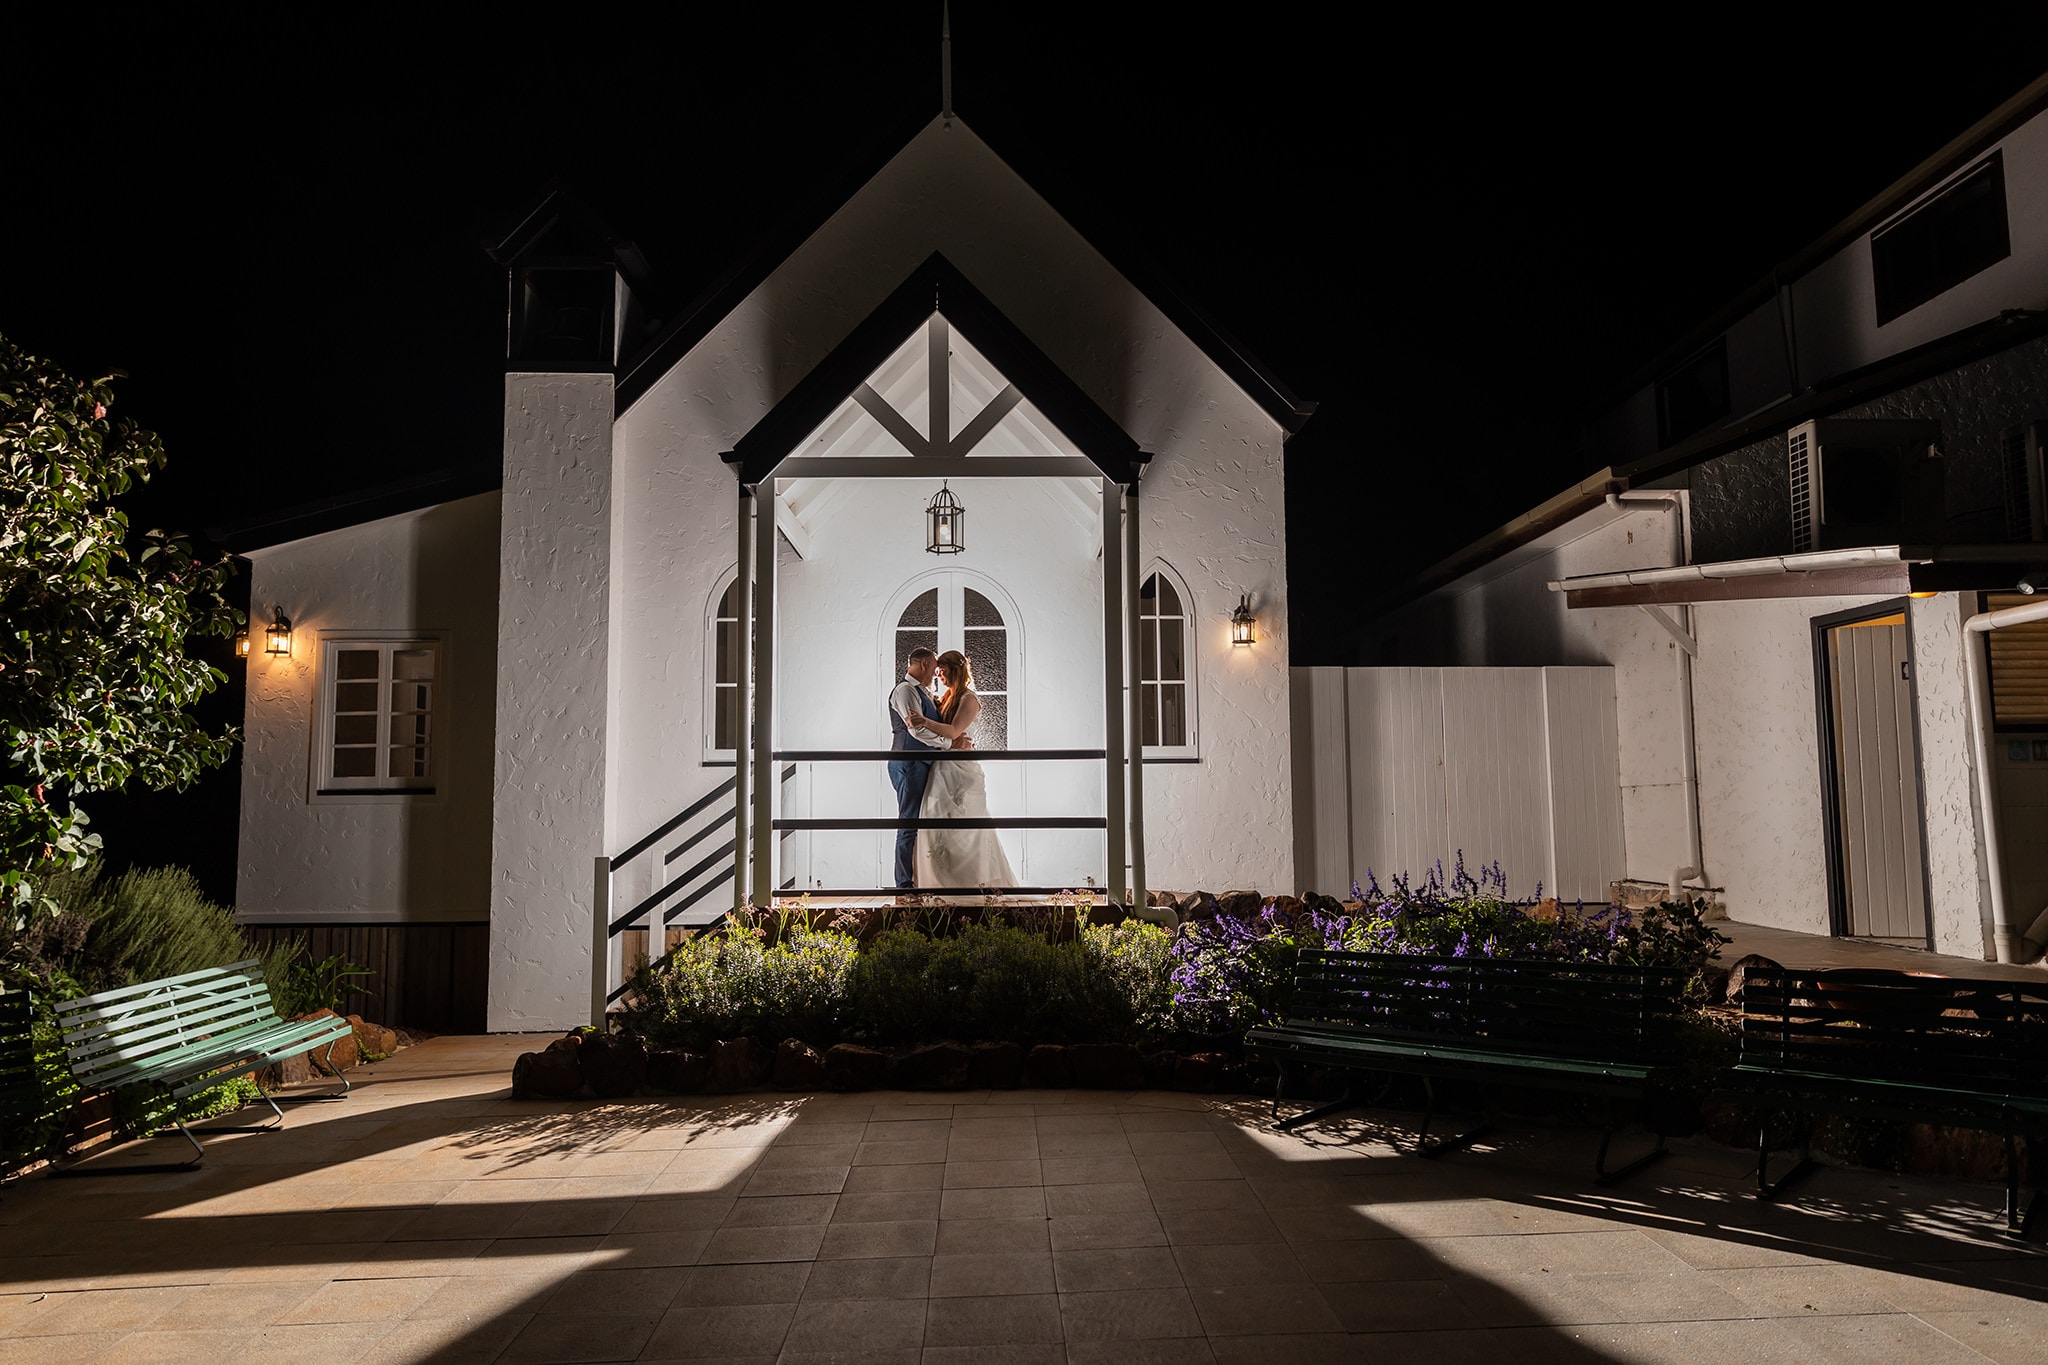 Night Photography wedding image at St Bernard's Hotel Chapel by Bec Pattinson Photography.